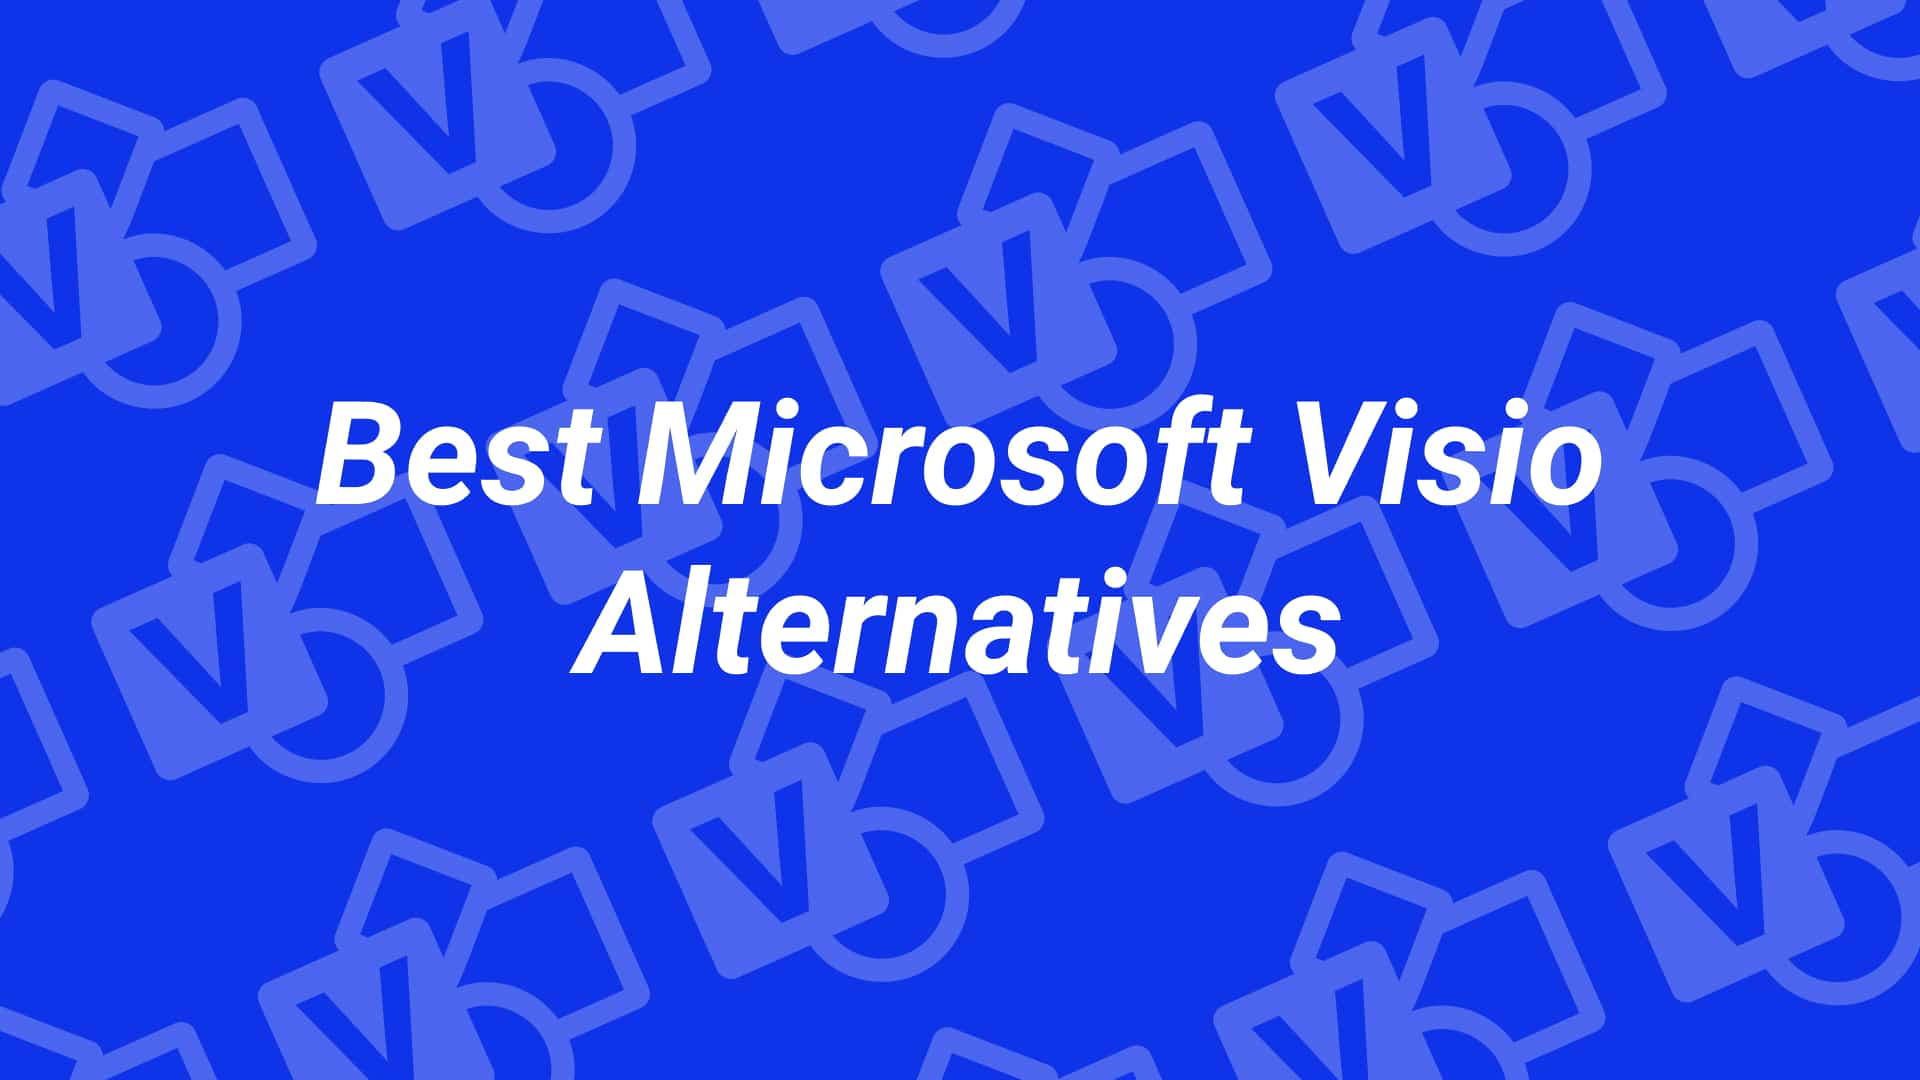 Best Microsoft Visio Alternatives